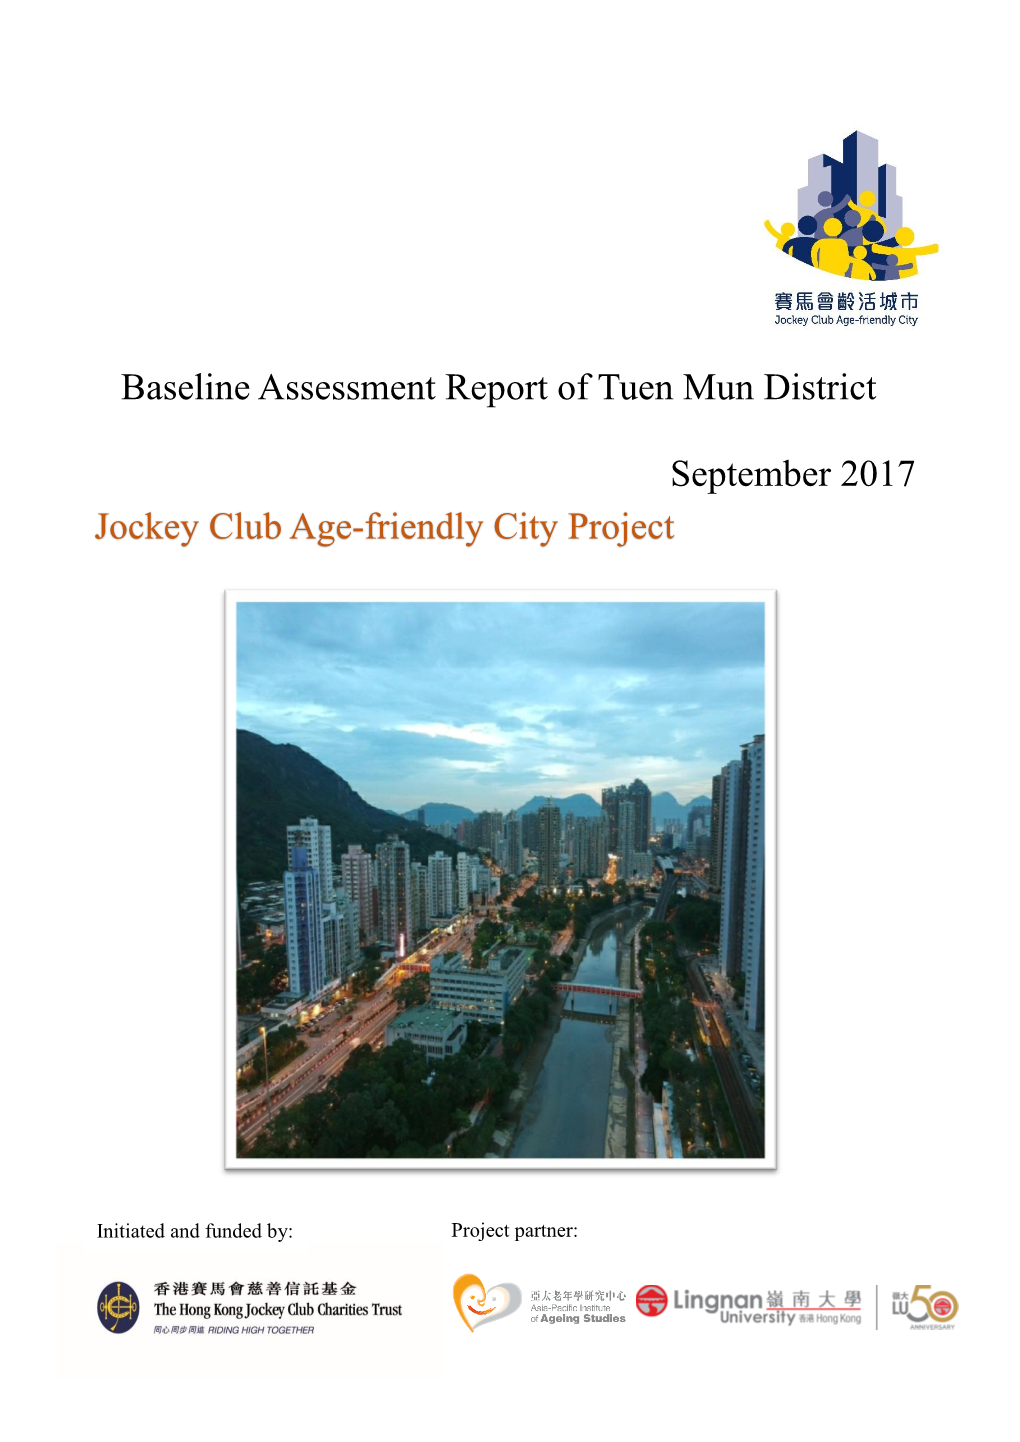 Jockey Club Age-Friendly City Project